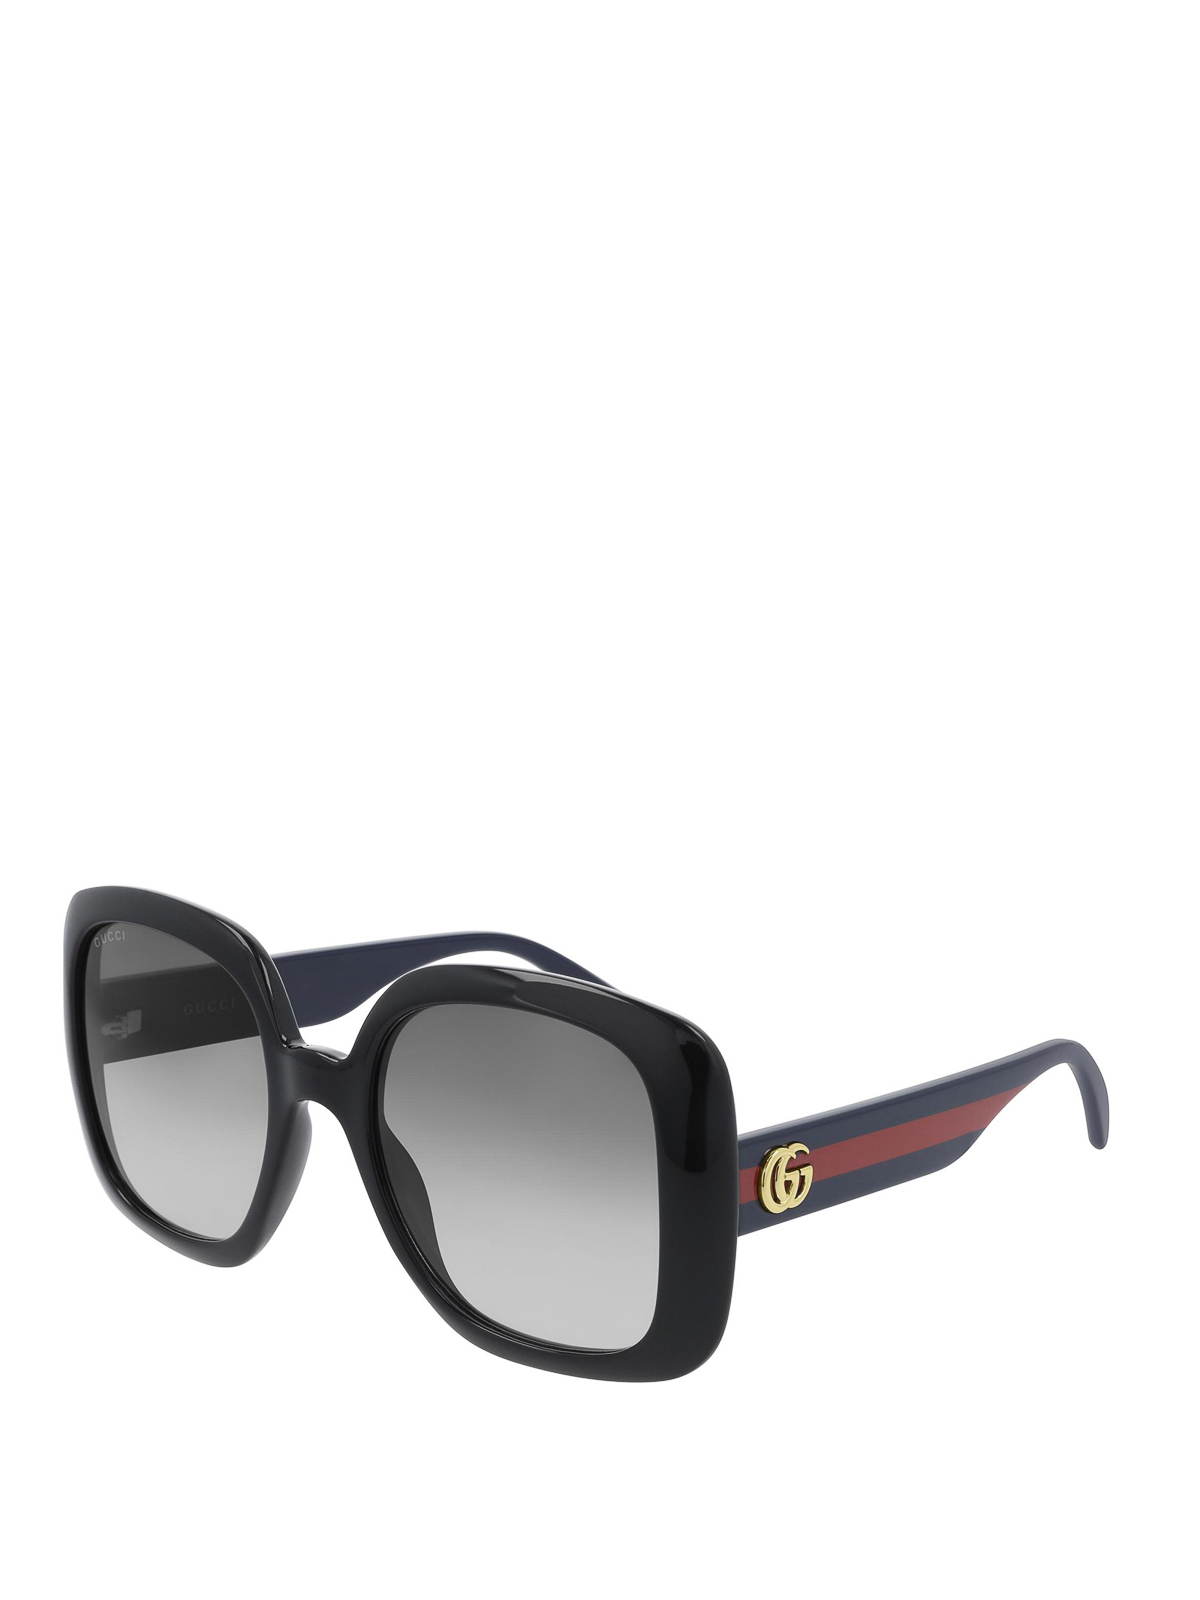 Sunglasses Gucci - Oversize round sunglasses - GG0713S001 | iKRIX.com